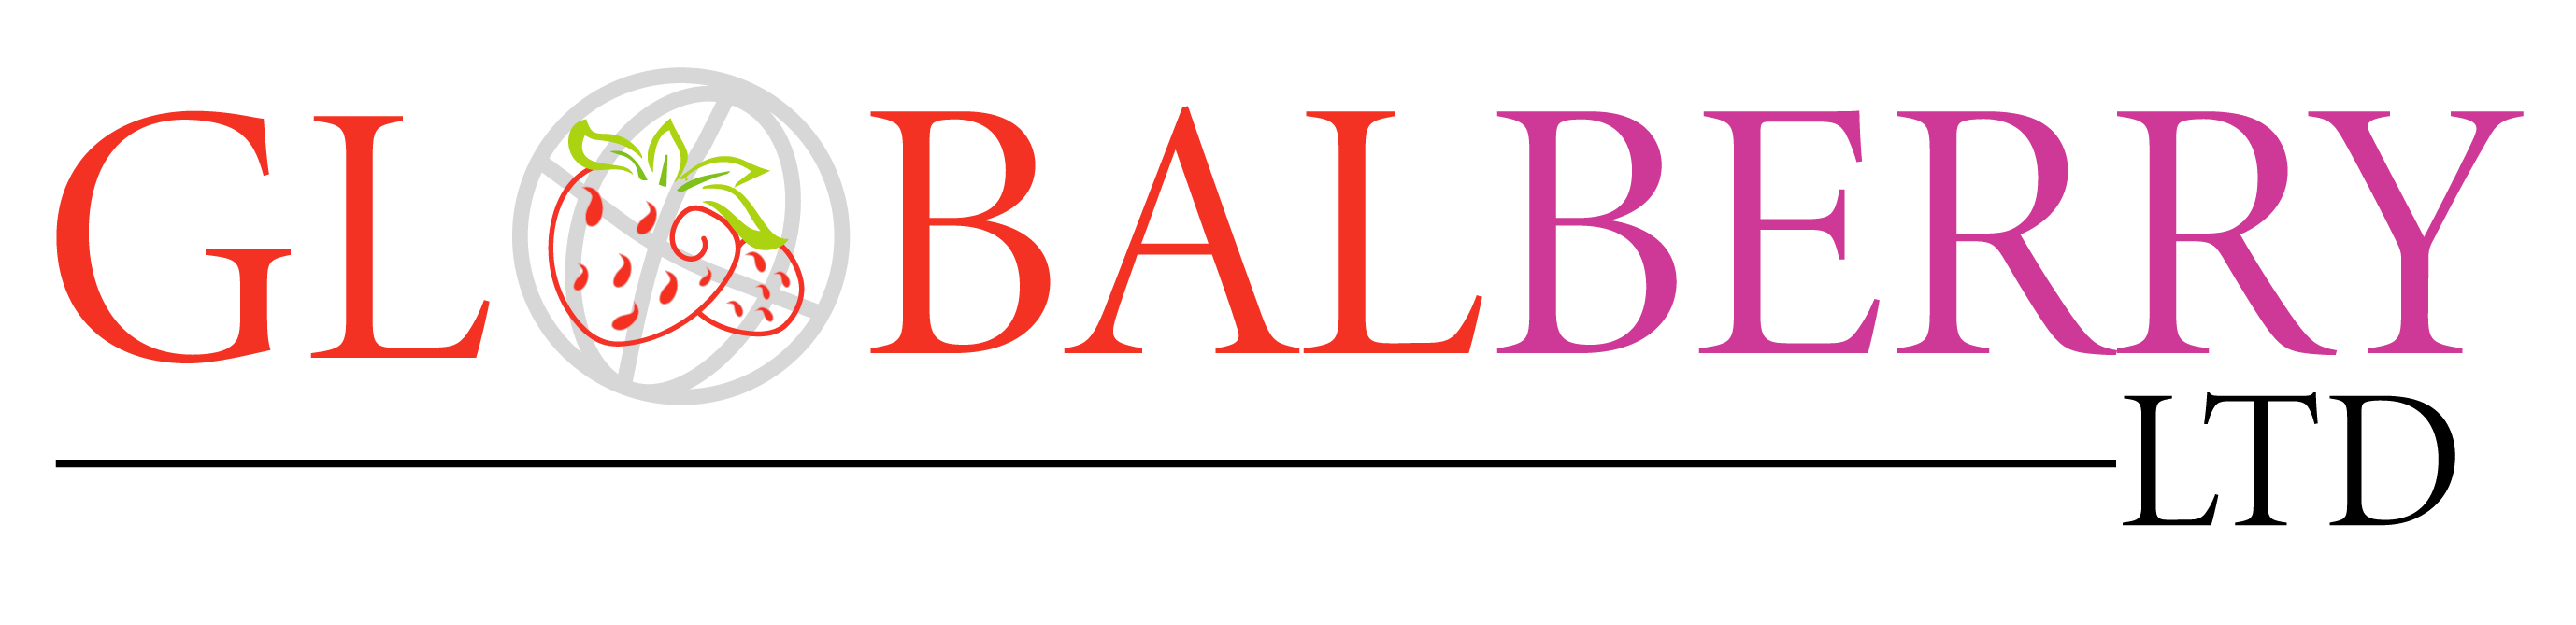 Global Berry logo